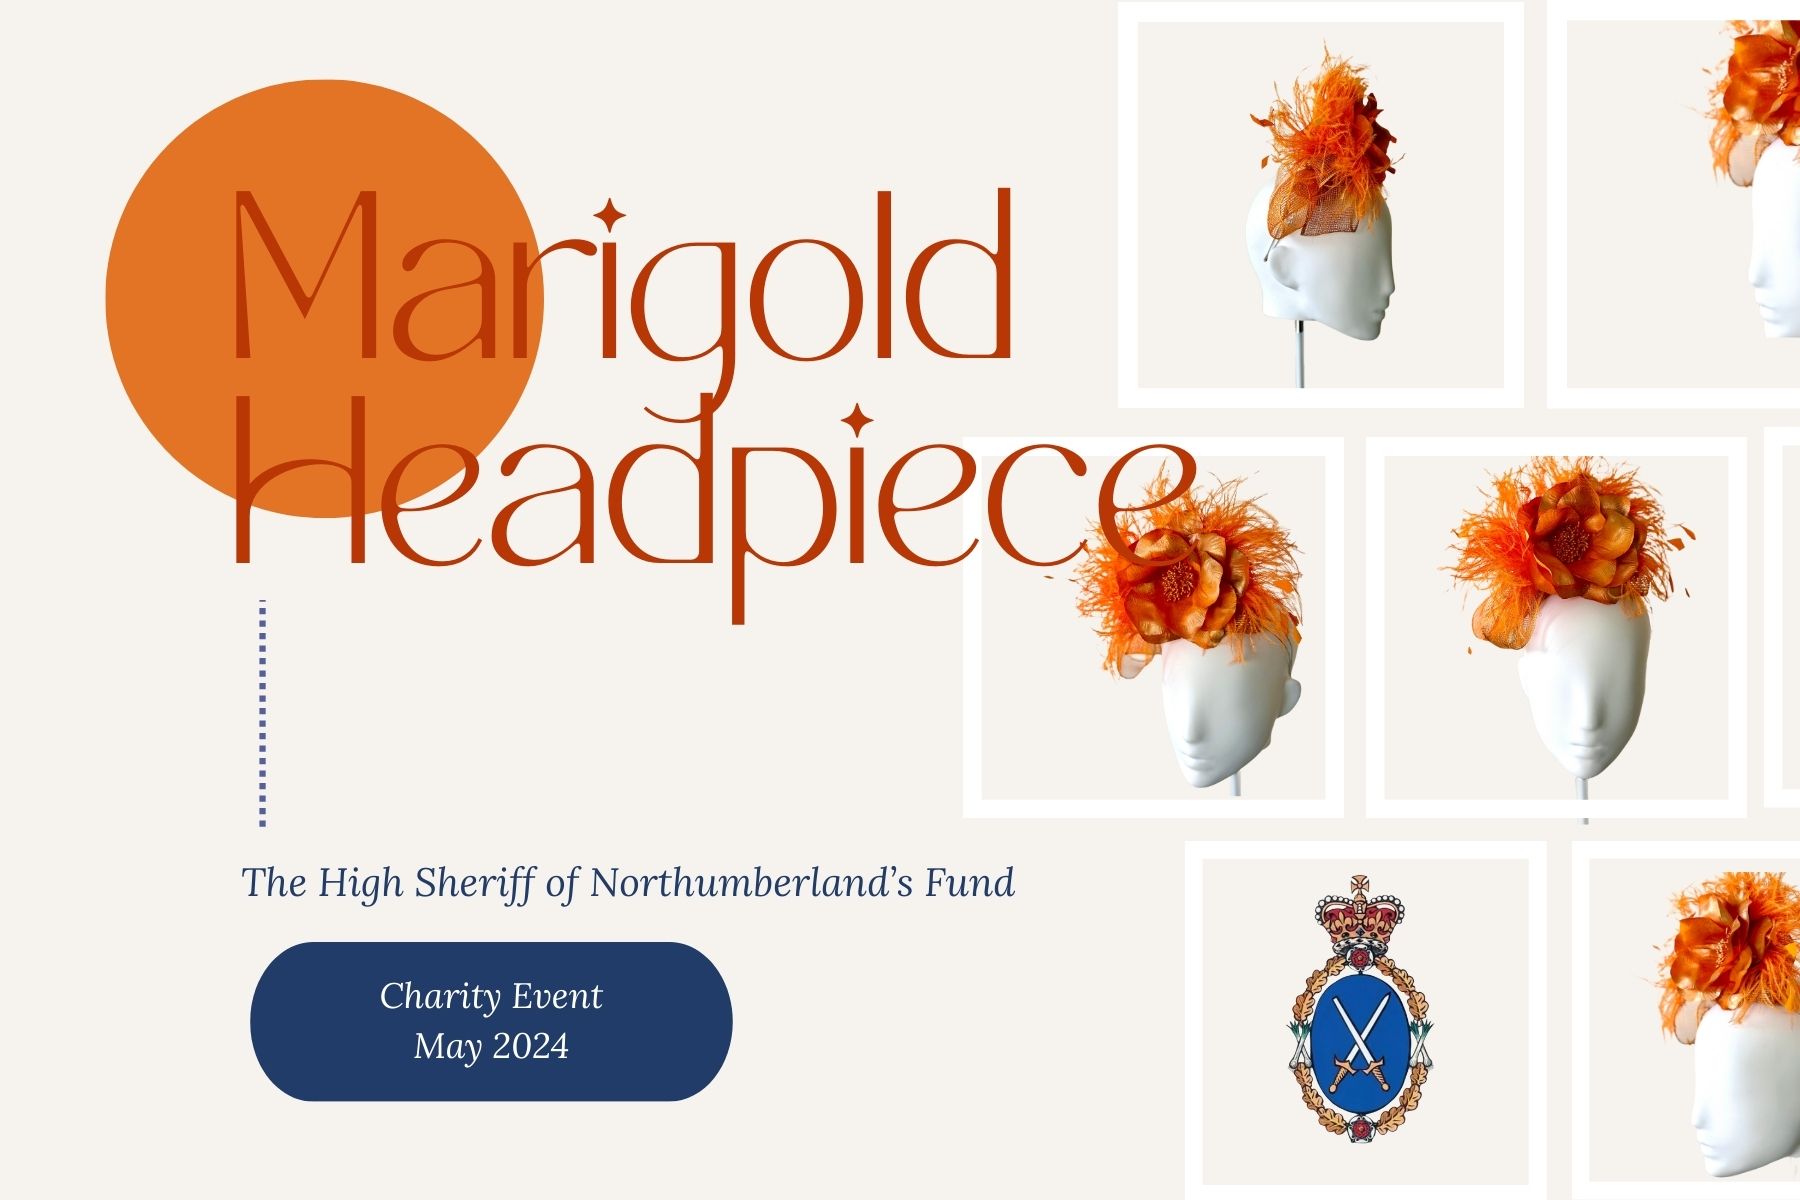 Views of the Marigold headpiece 